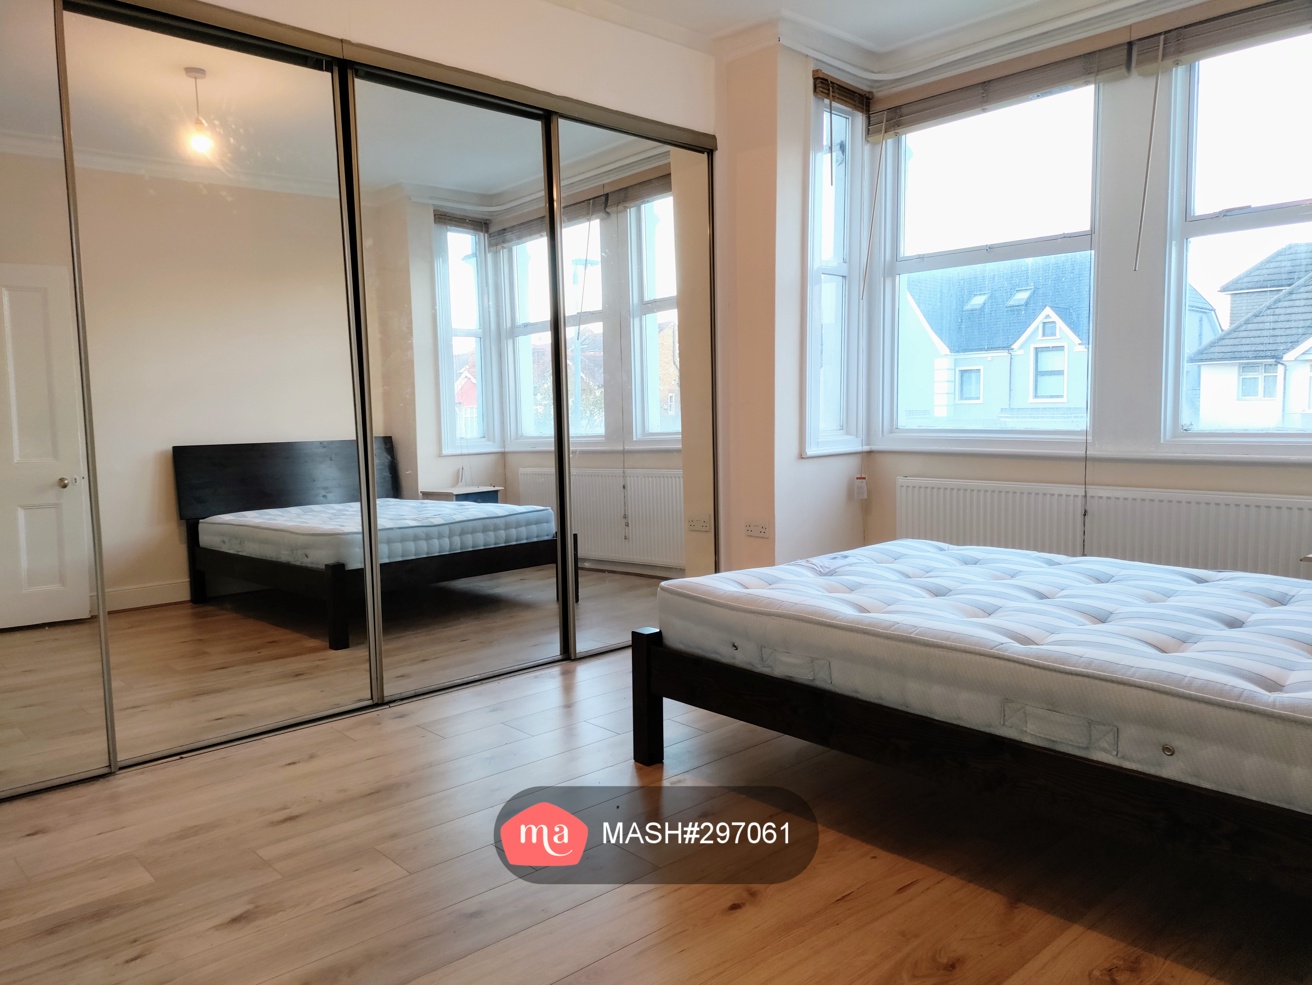 5 Bedroom Semi-detached to rent in London - Mashroom